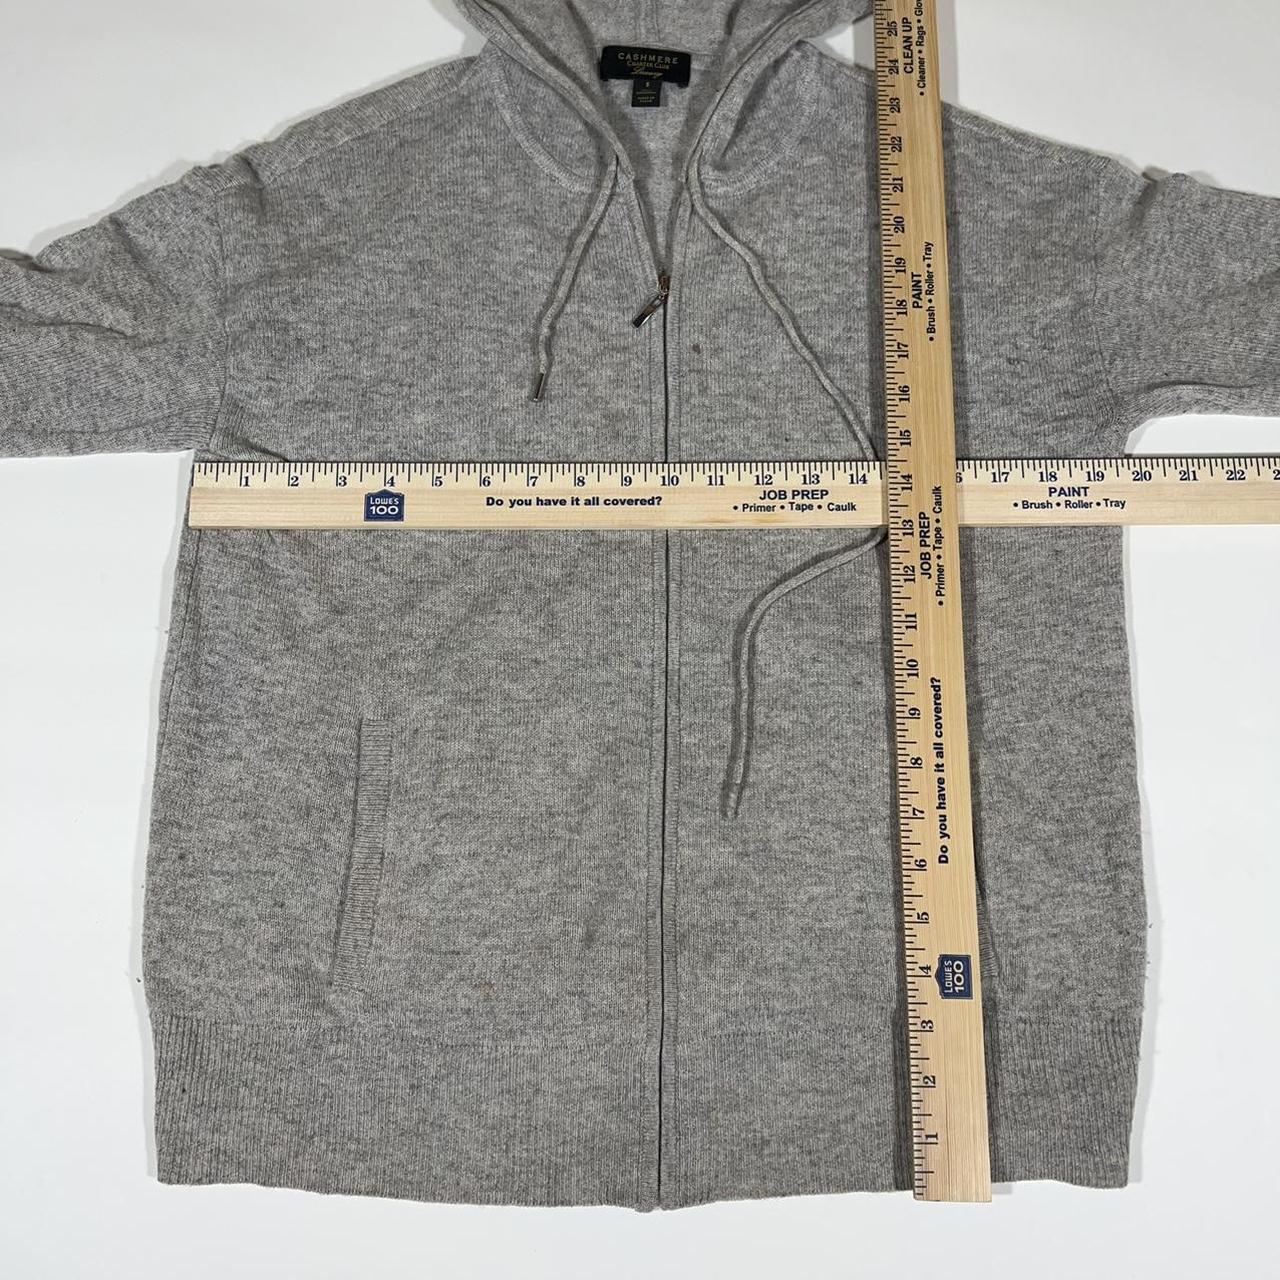 Product Image 2 - Vintage 90s grey cashmere jacket.